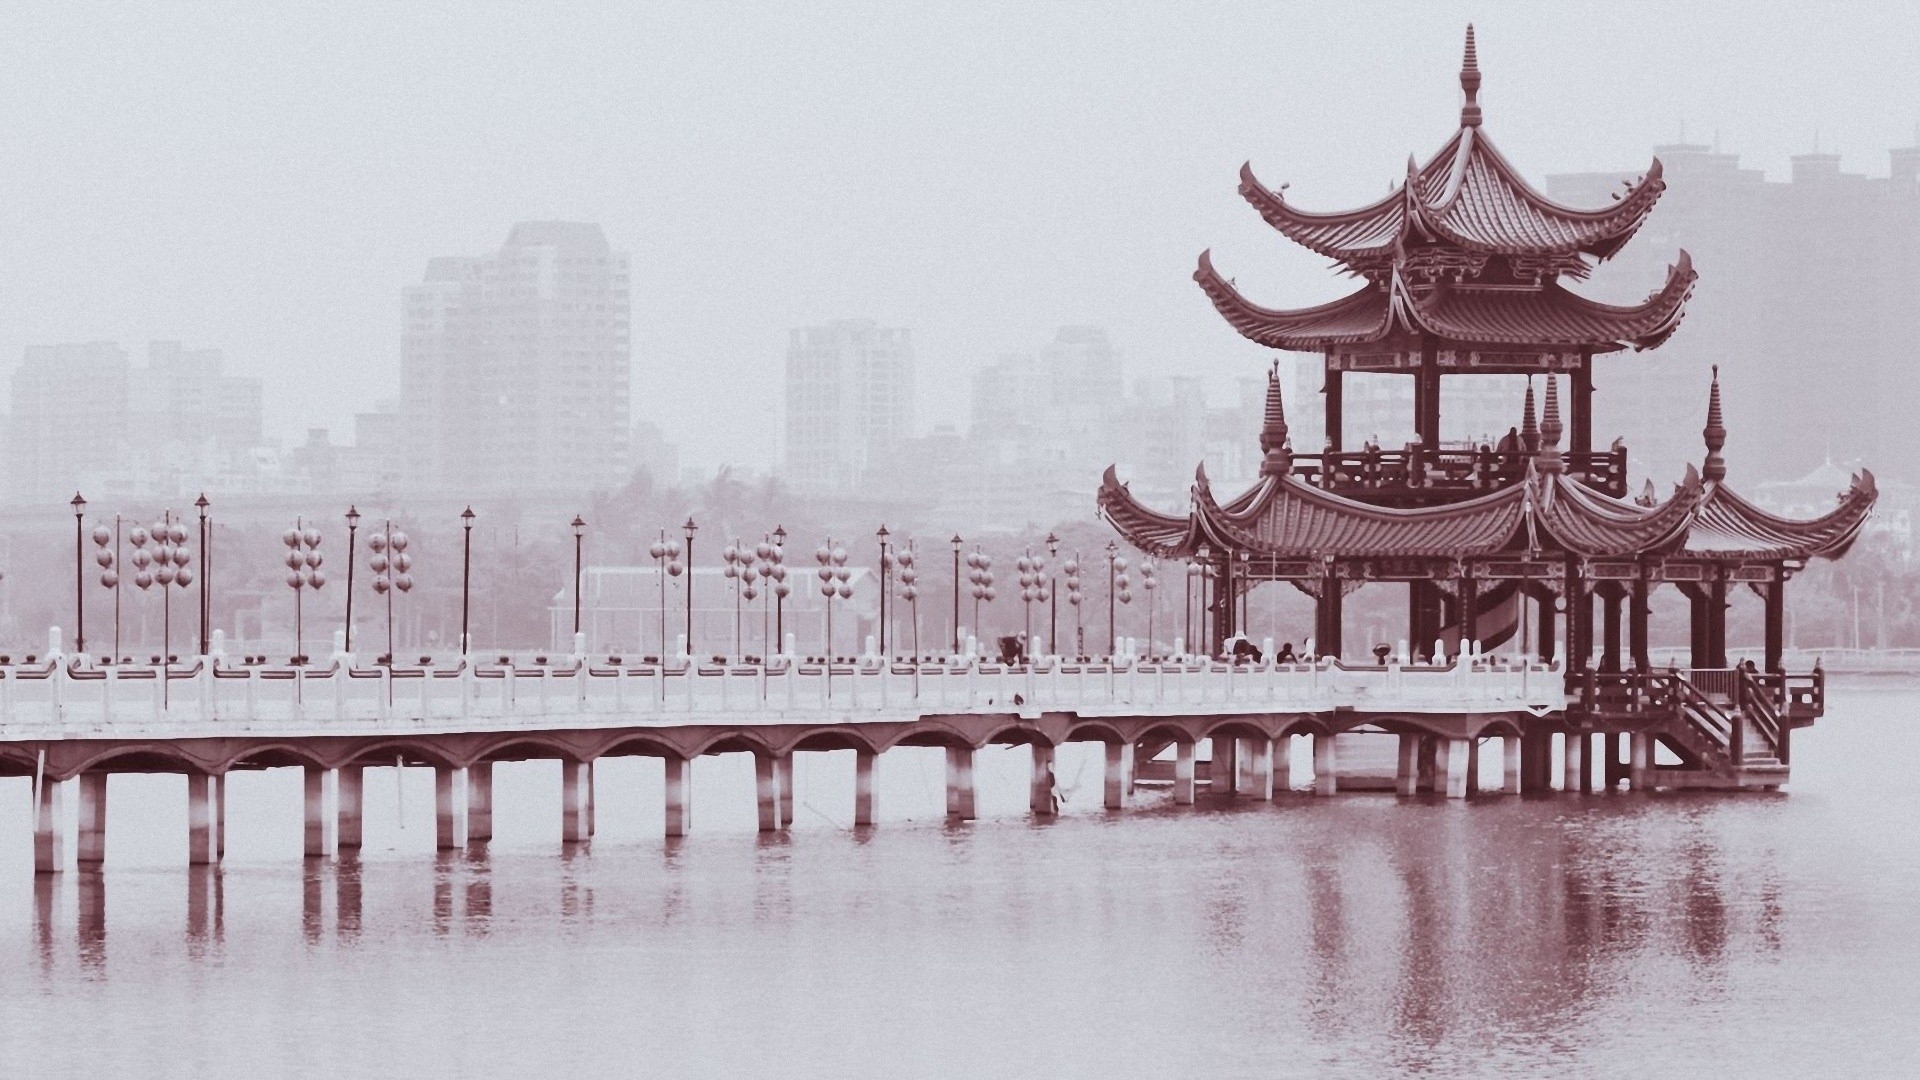 Chinese Monochrome Wallpaper Design Bridges